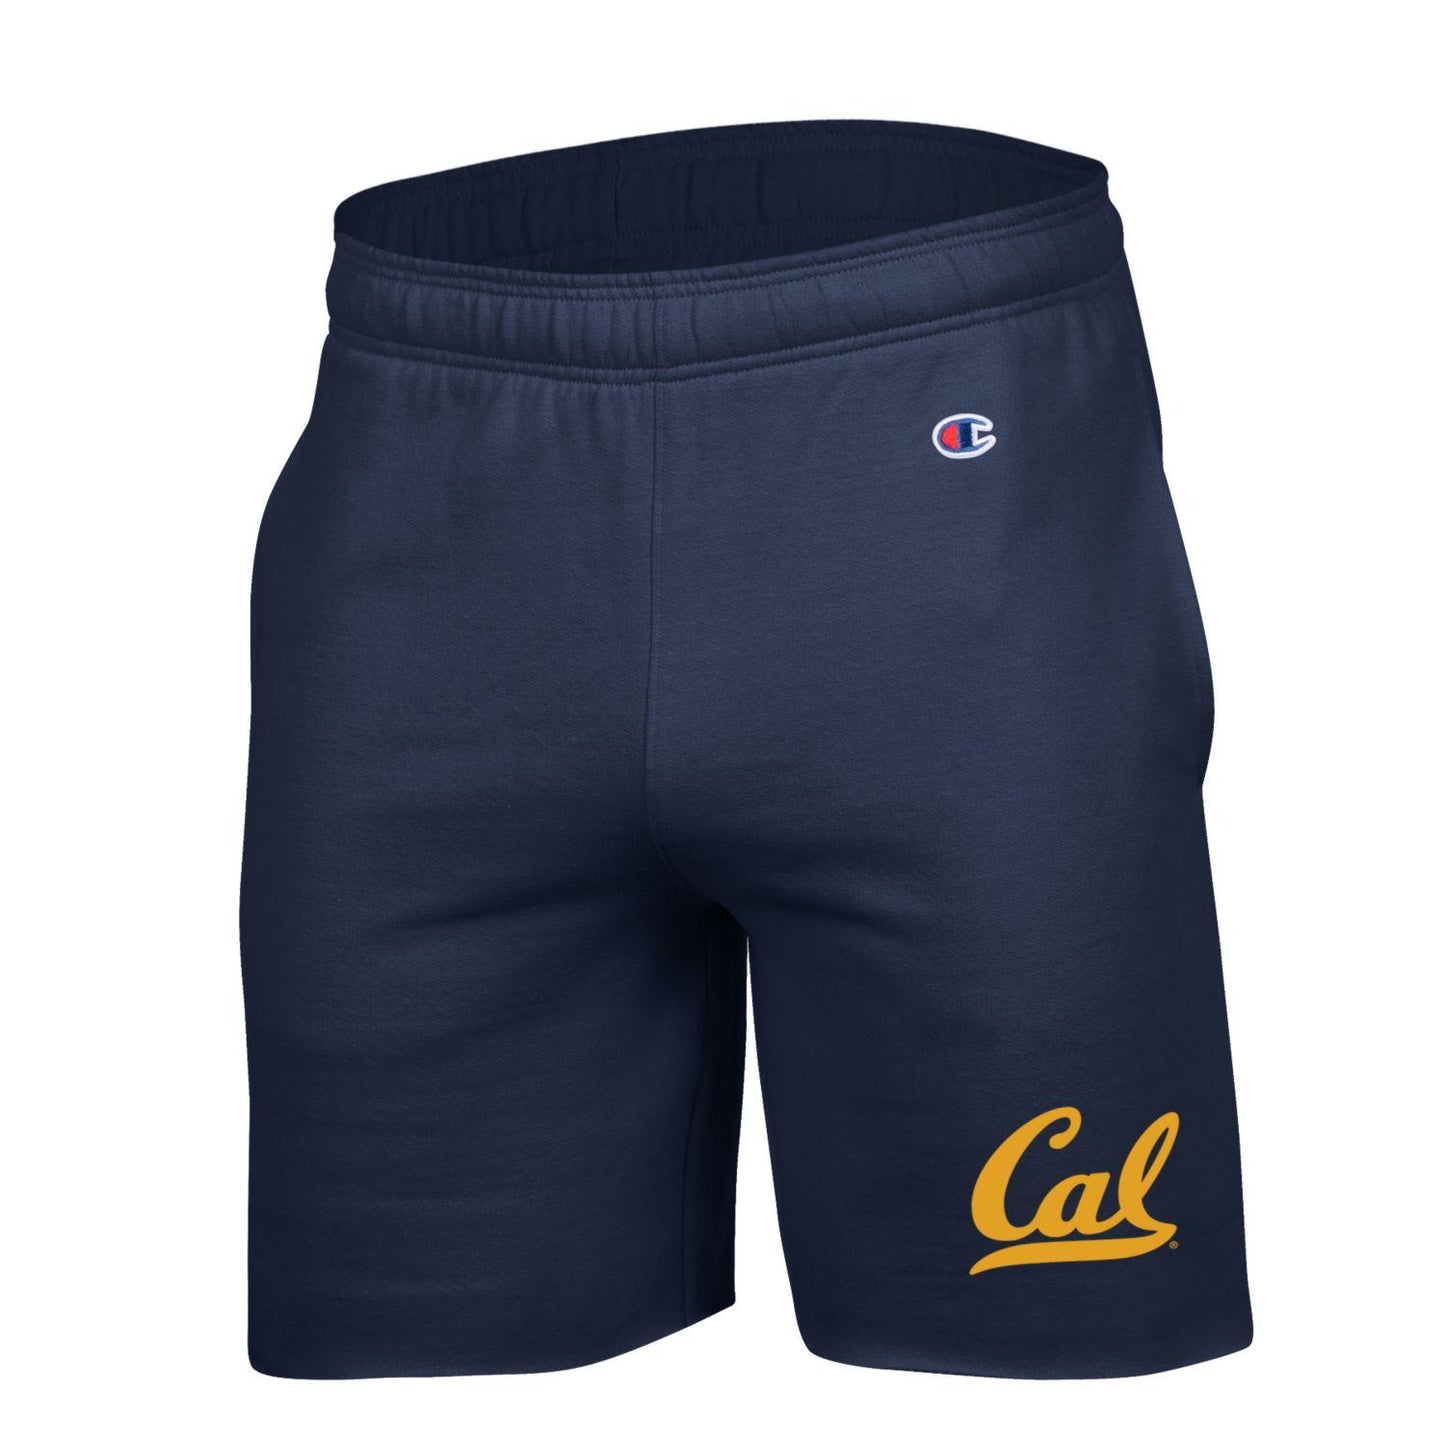 U.C. Berkeley Cal men's power blend short-Navy-Shop College Wear